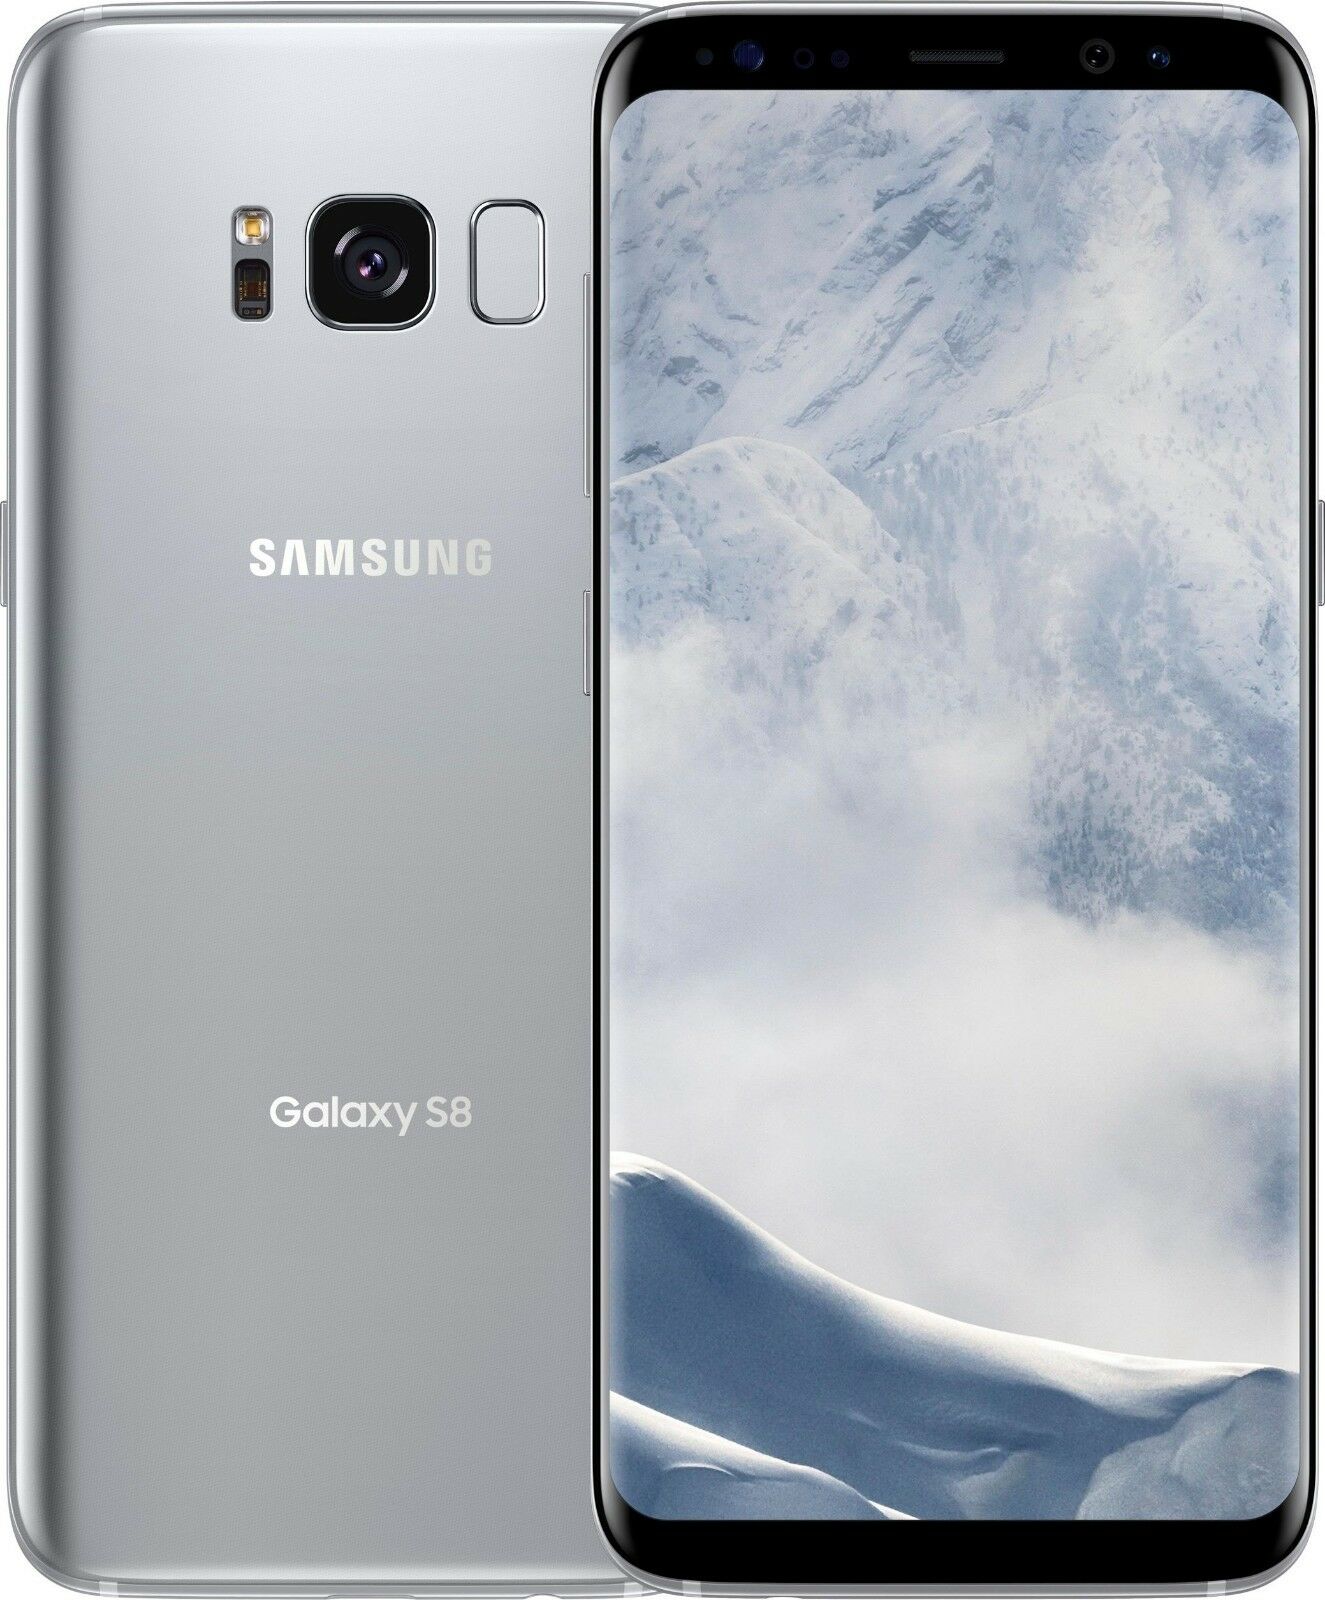 Unlocked Samsung Galaxy S8 64gb - Mobile Culture